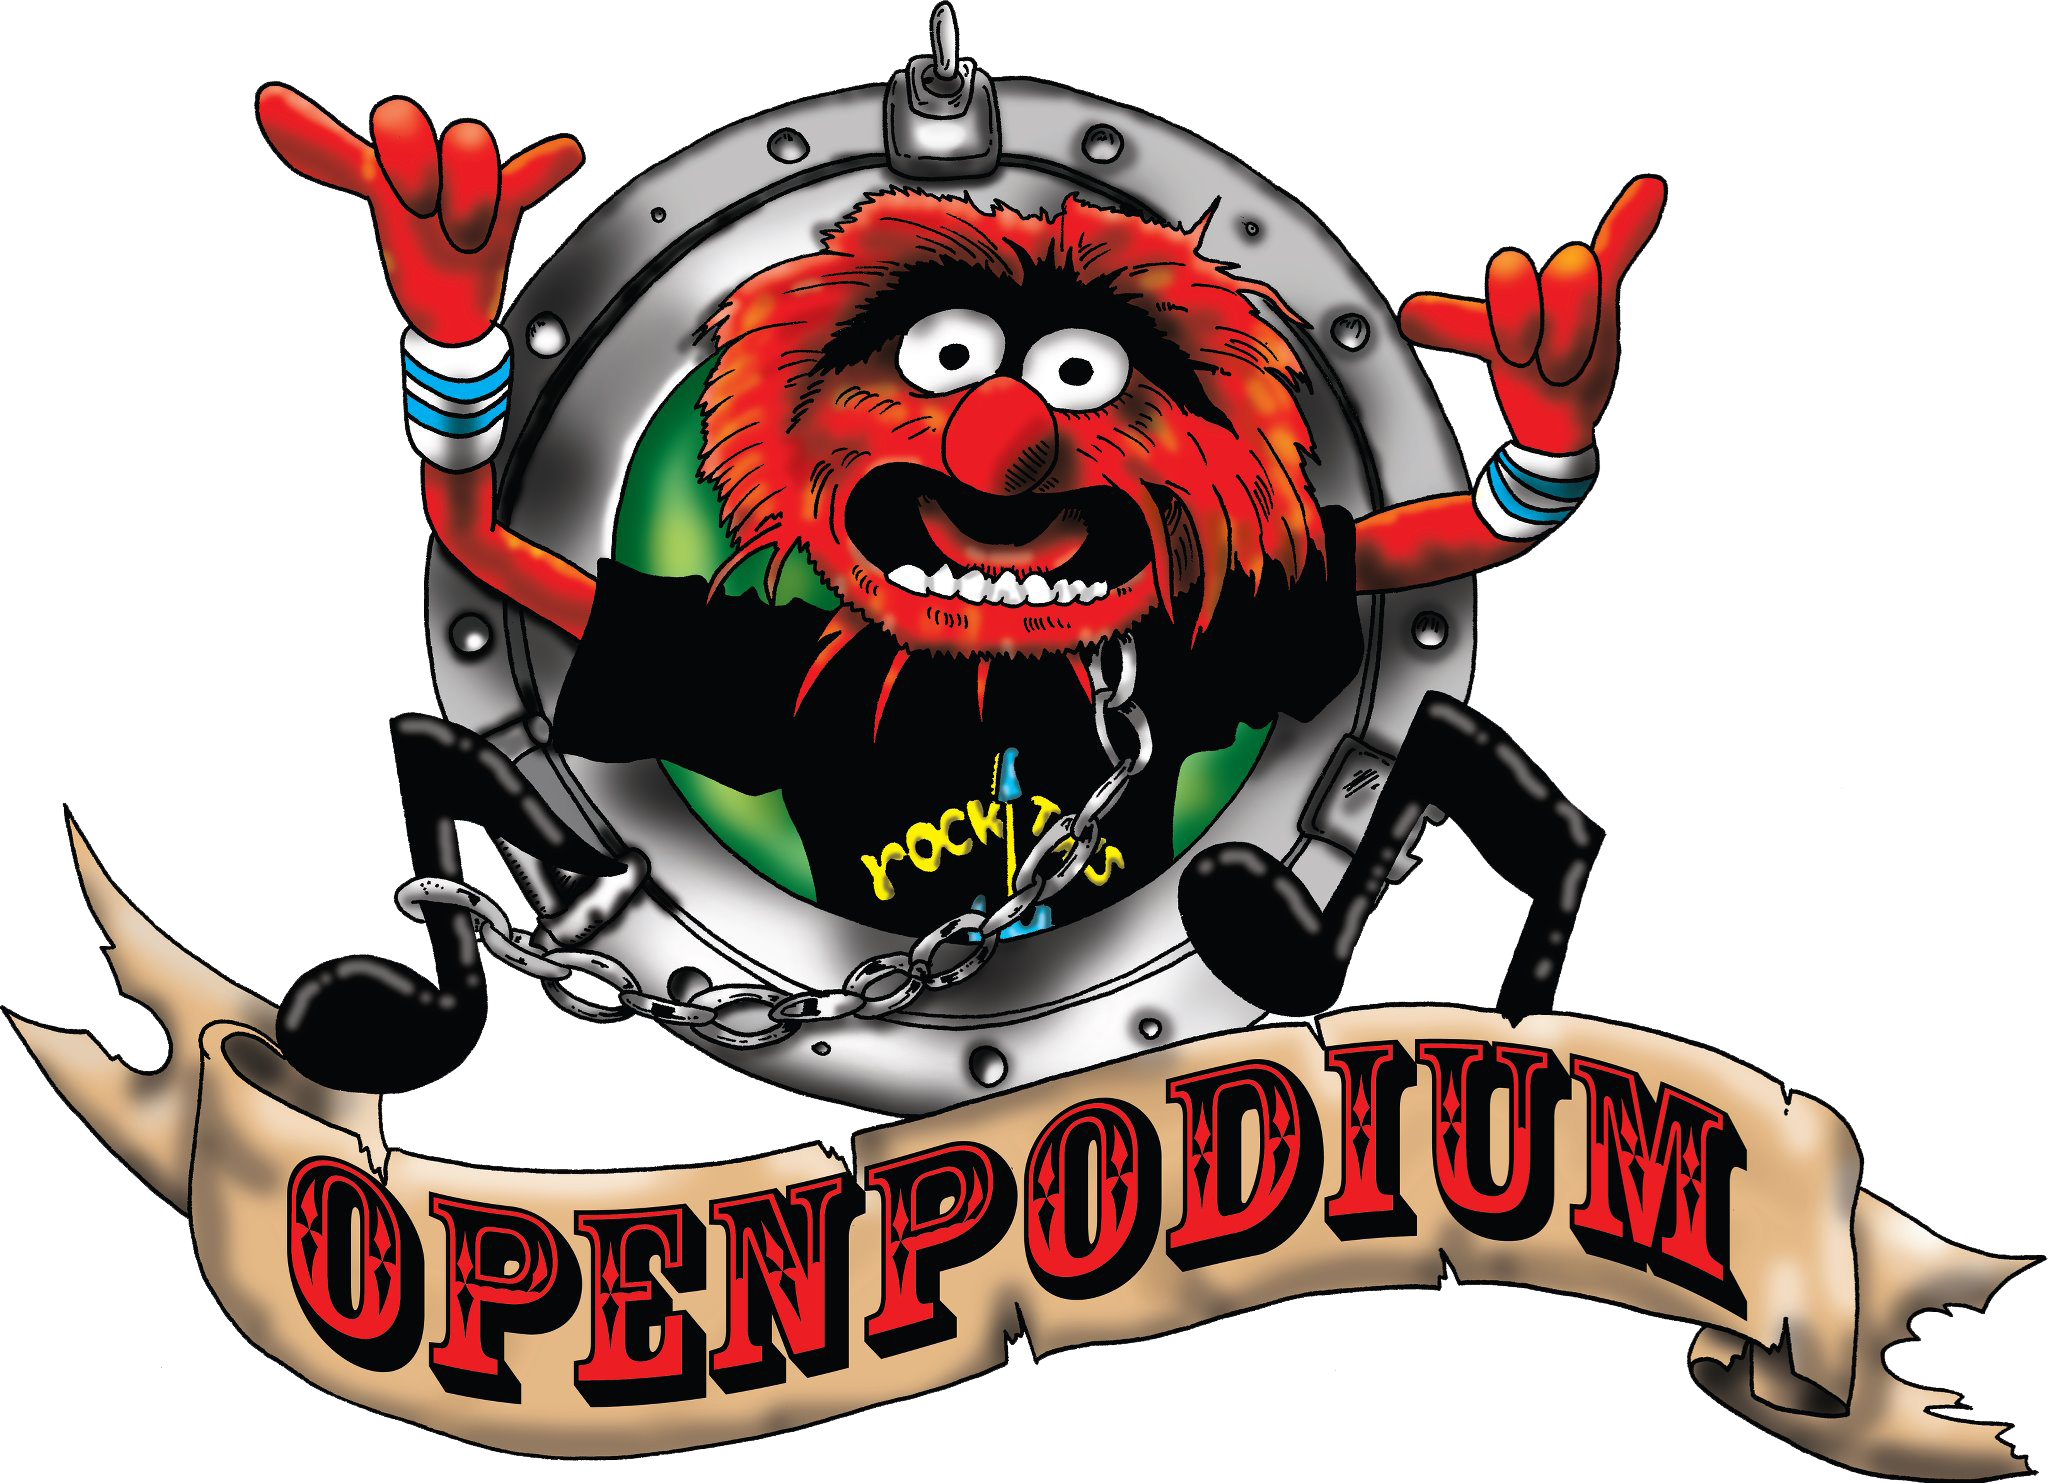 Logo Open podium